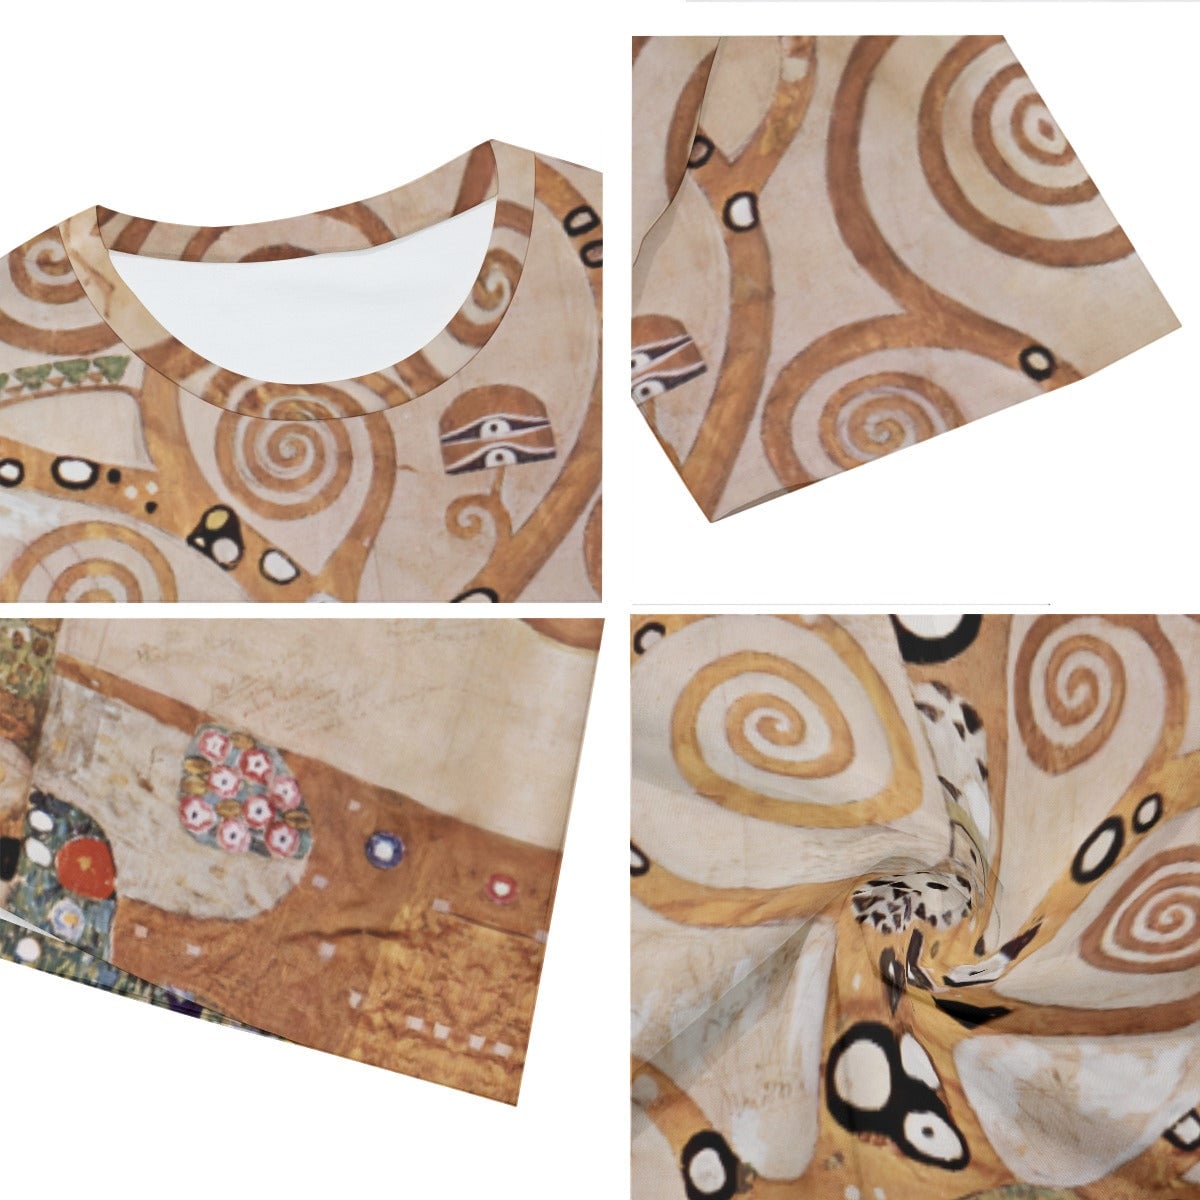 Gustav Klimt’s L’Arbre de Vie Painting T-Shirt